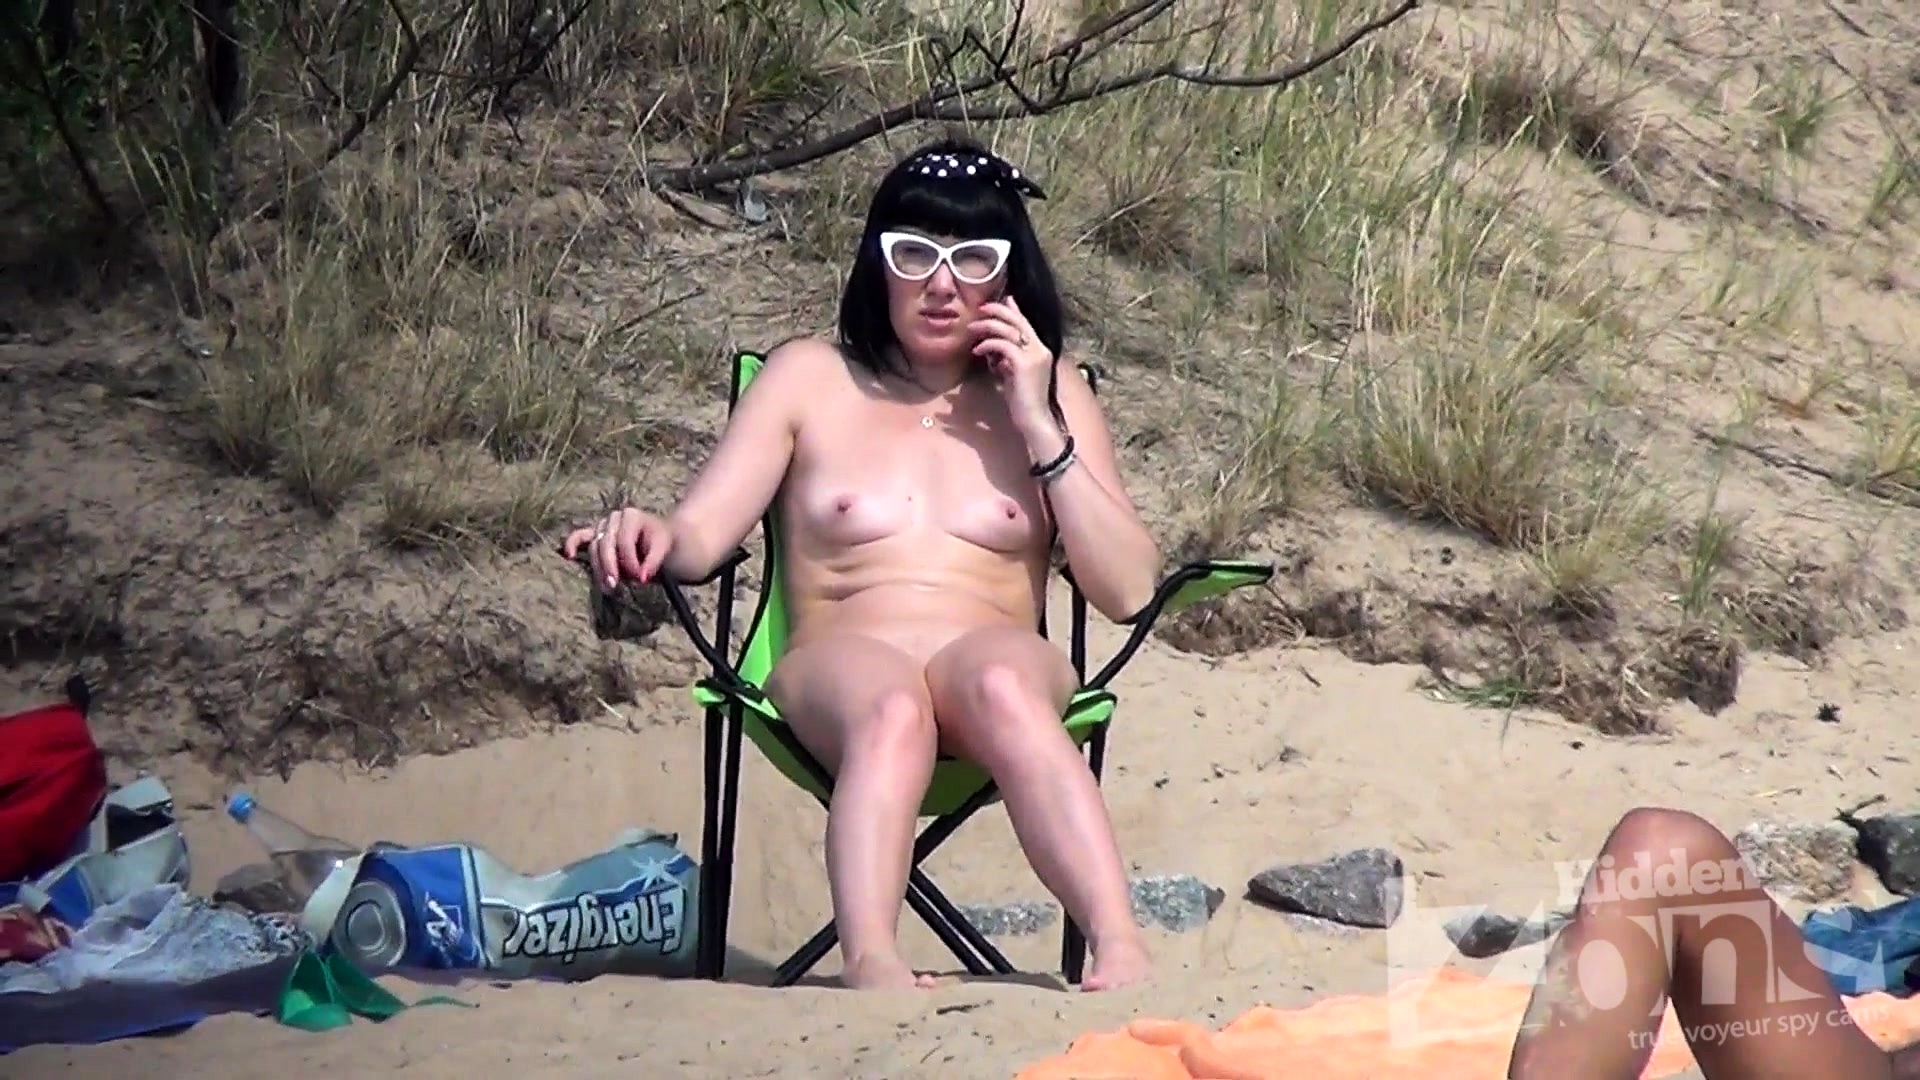 Free Mobile Porn Videos - Public Voyeur Enjoys Nude Beach Sex - 3354604 foto afbeelding